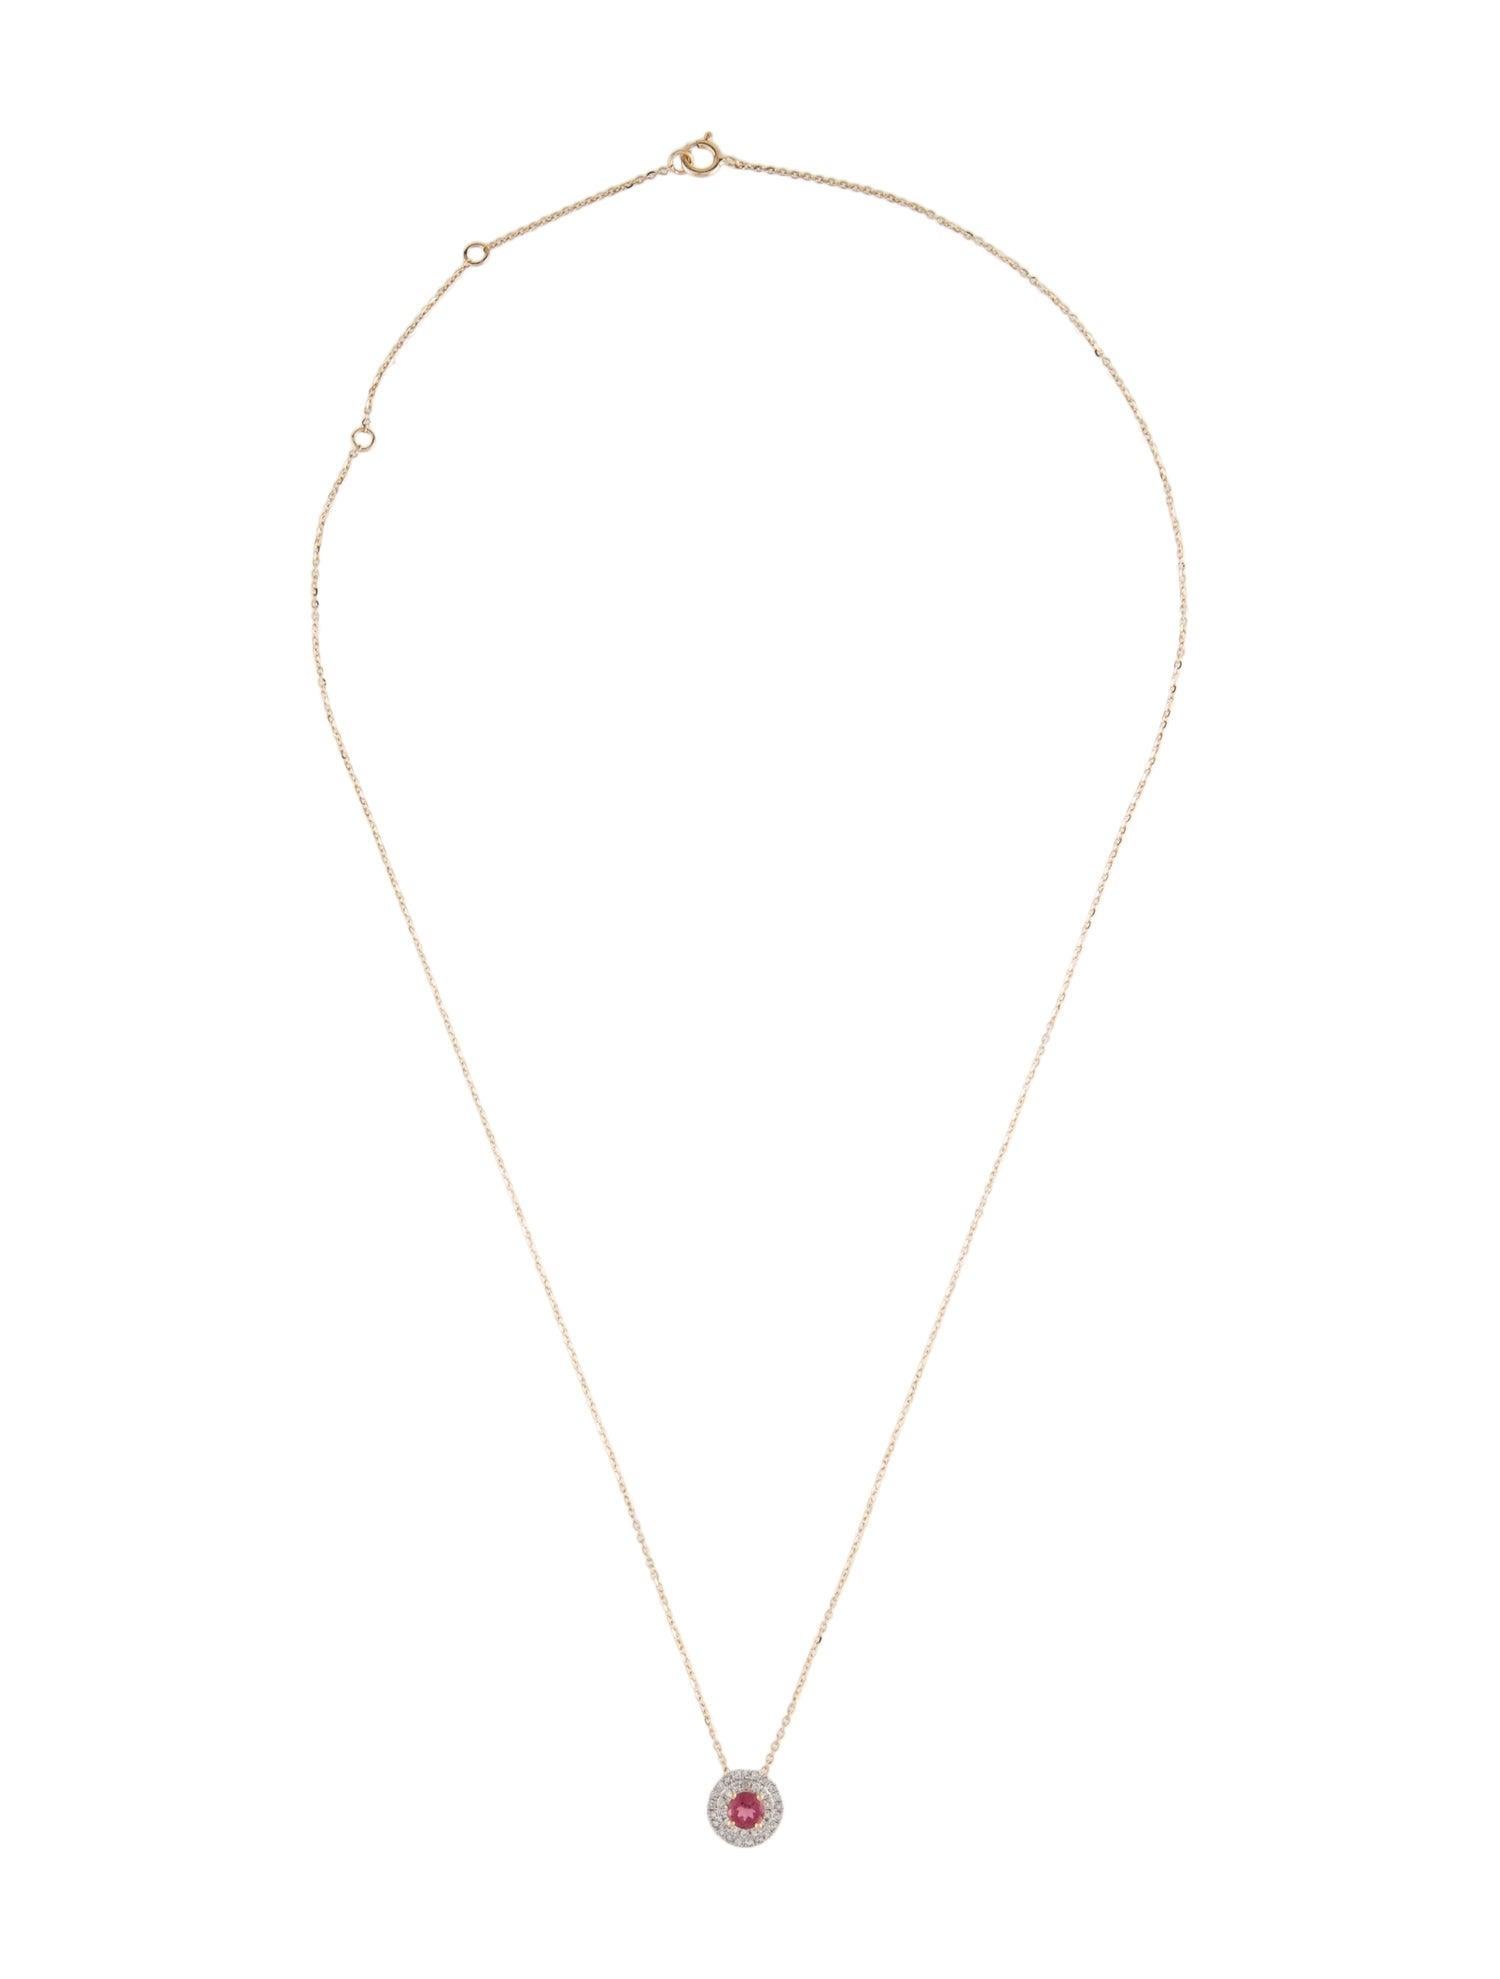 Brilliant Cut 14K Tourmaline & Diamond Pendant Necklace: Exquisite Luxury Statement Jewelry For Sale